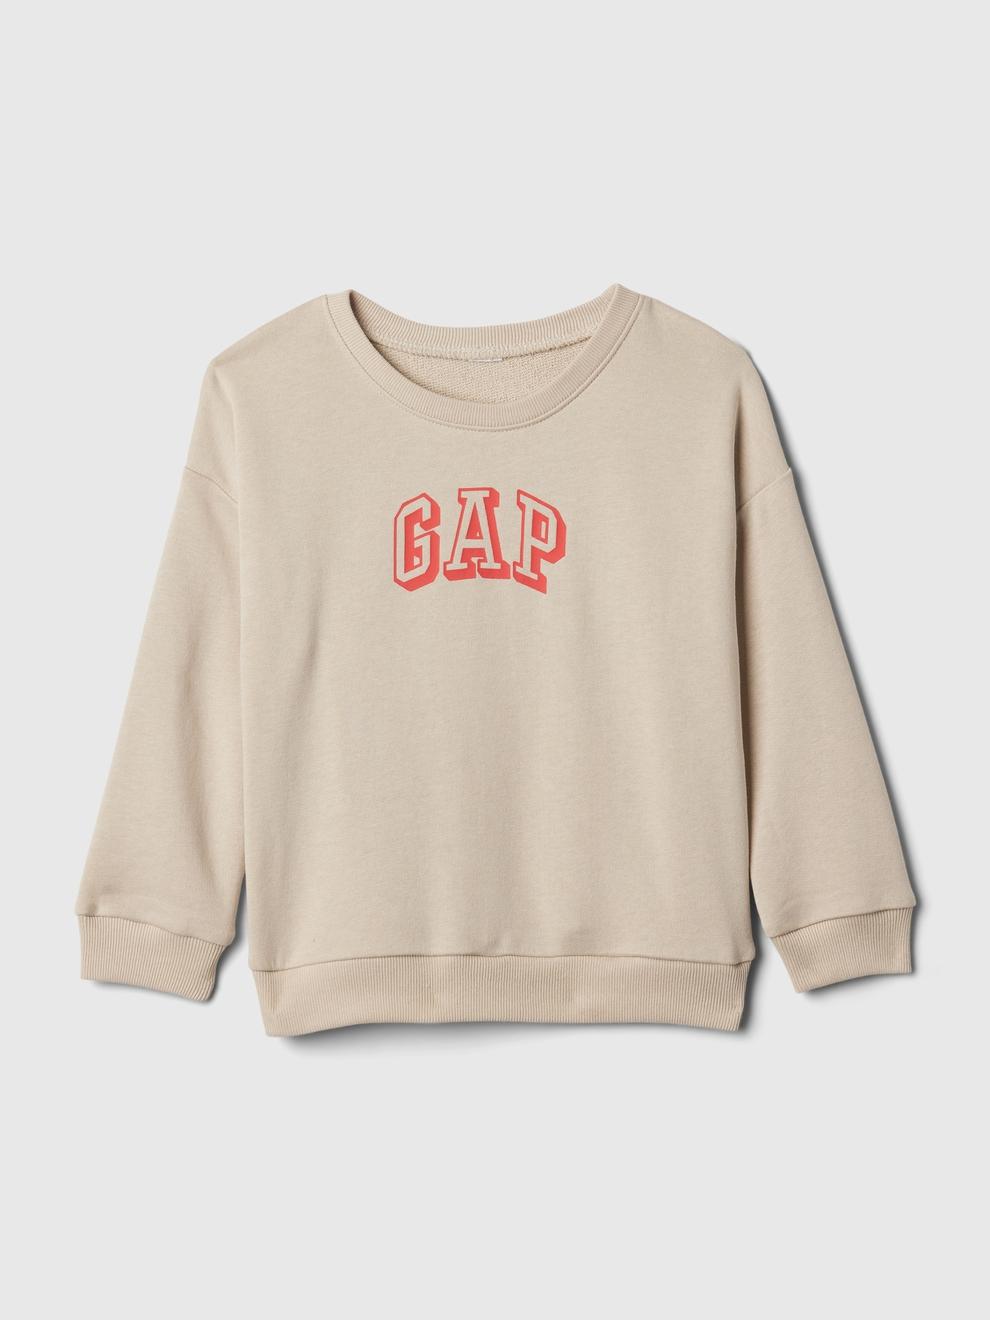 BabyGap Logo Sweatshirt offers at 47 Dhs in Gap